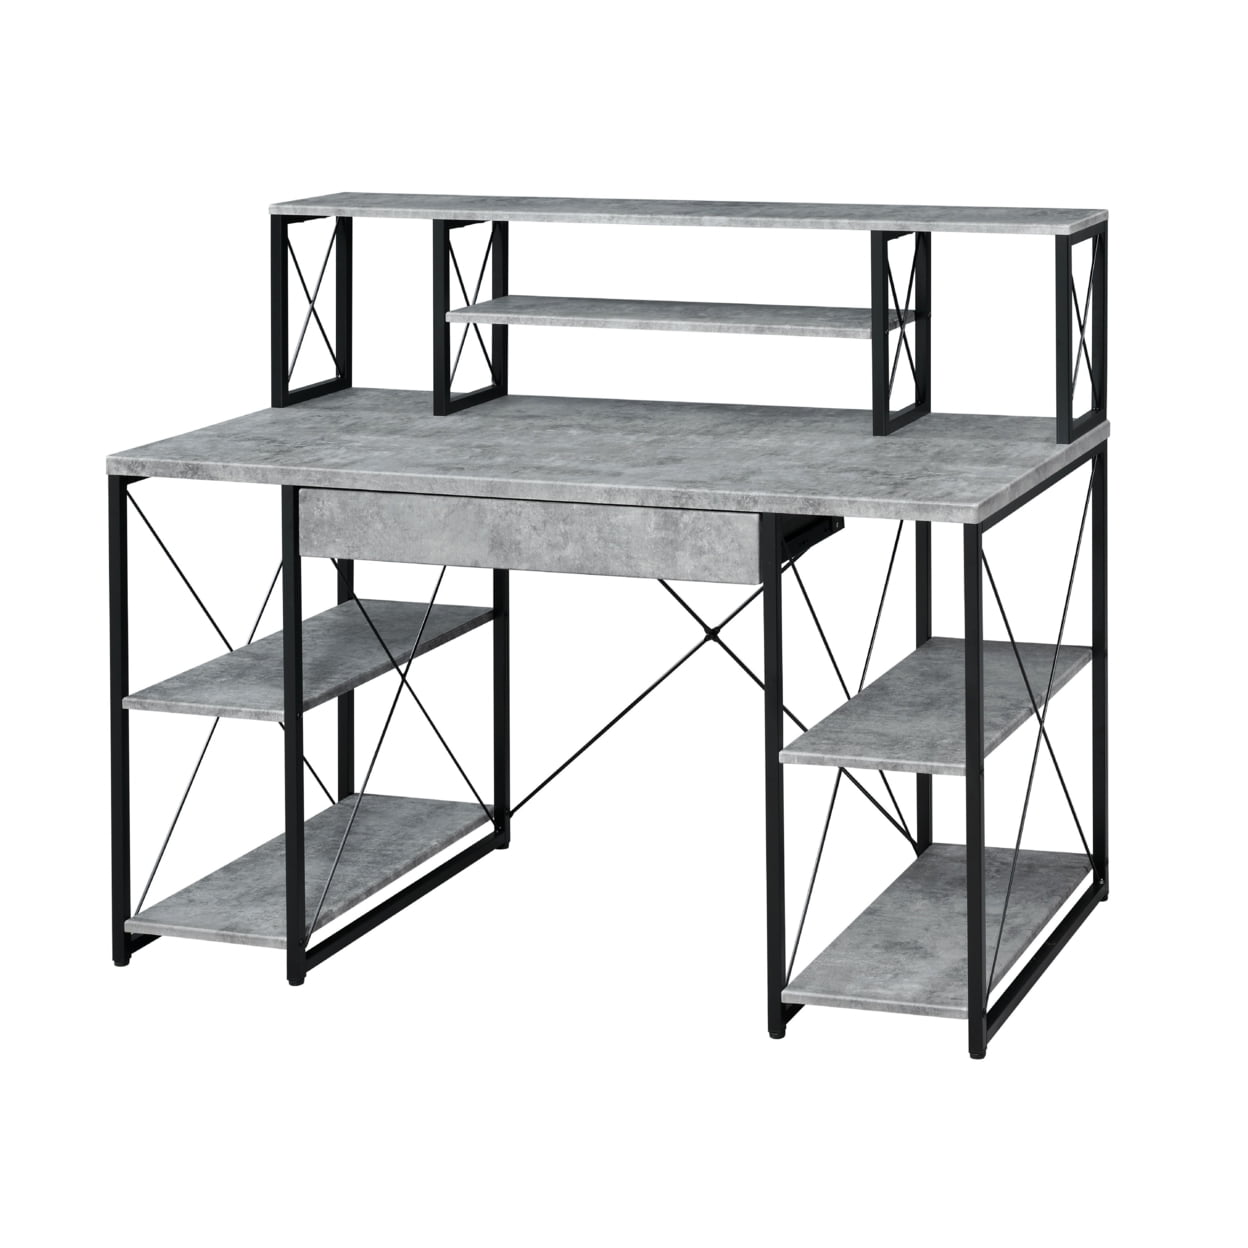 Bm209610 Metal Desk With 4 Open Bottom Shelves & Bookcase Hutch - Gray & Black - 41 X 24 X 47 In.